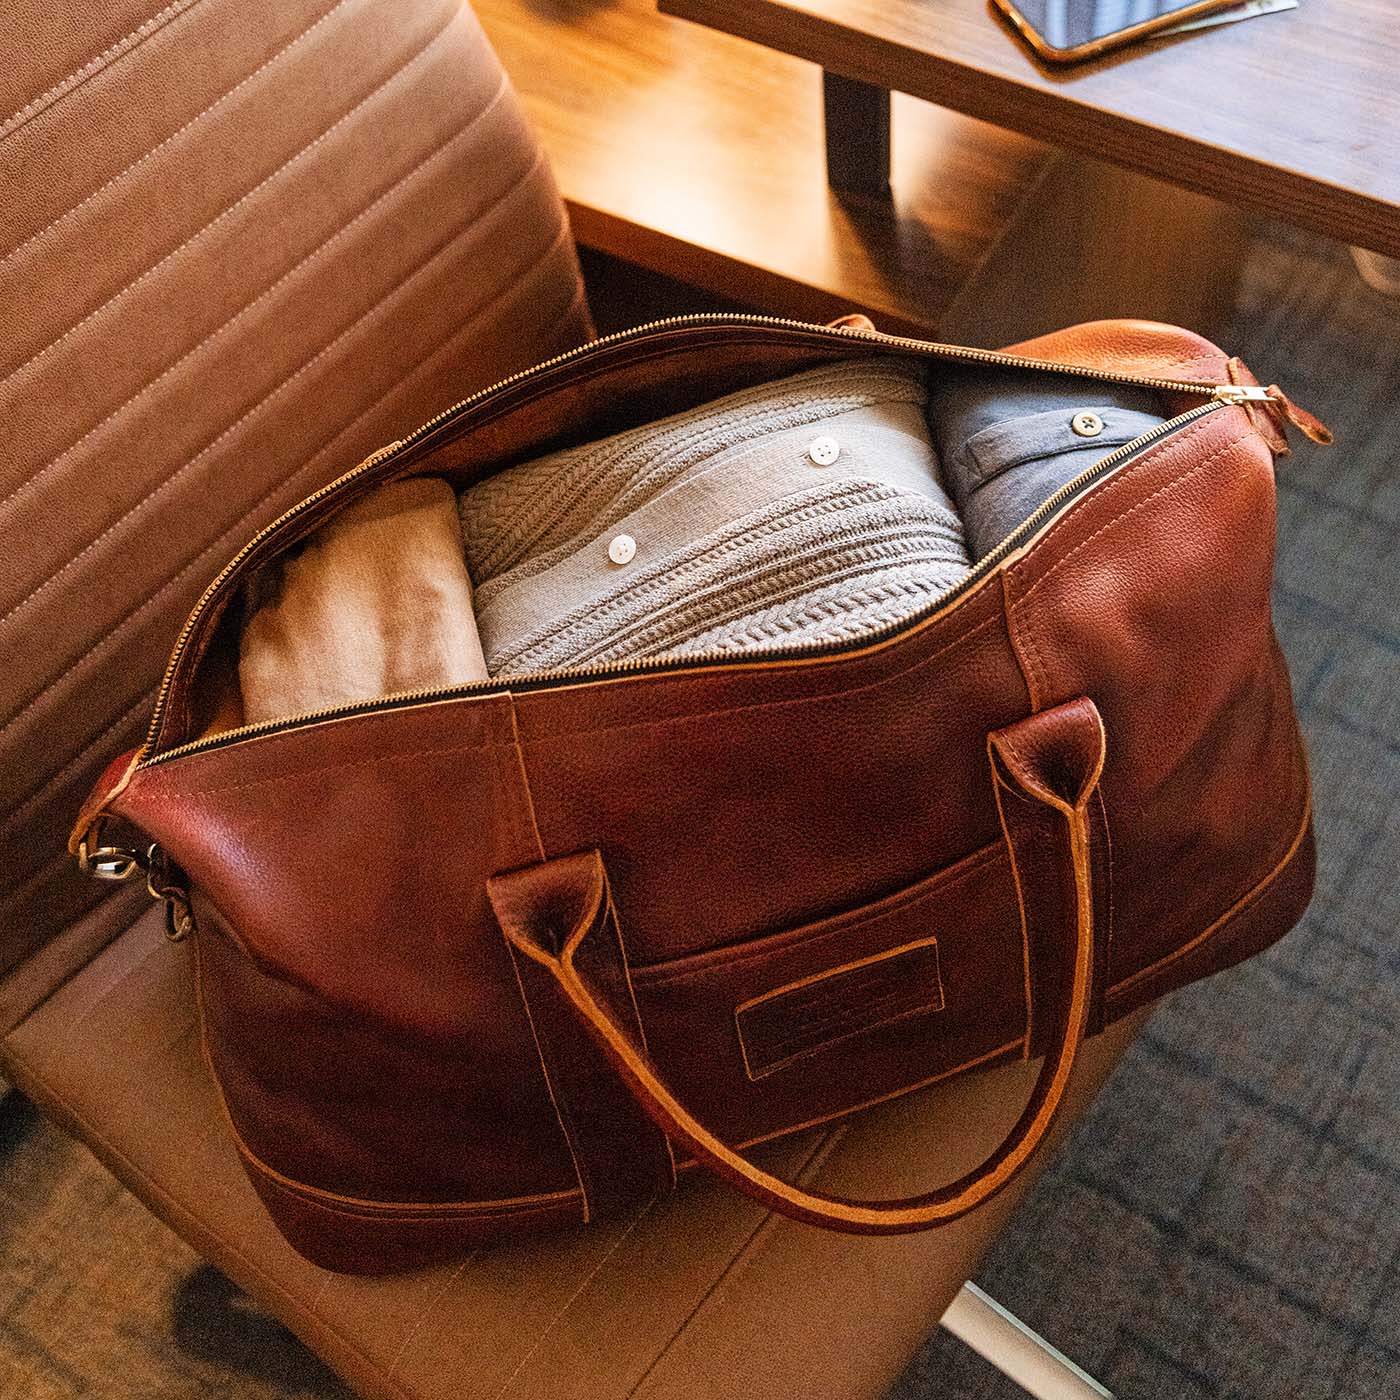 Deep Pocket Leather Duffle Bag